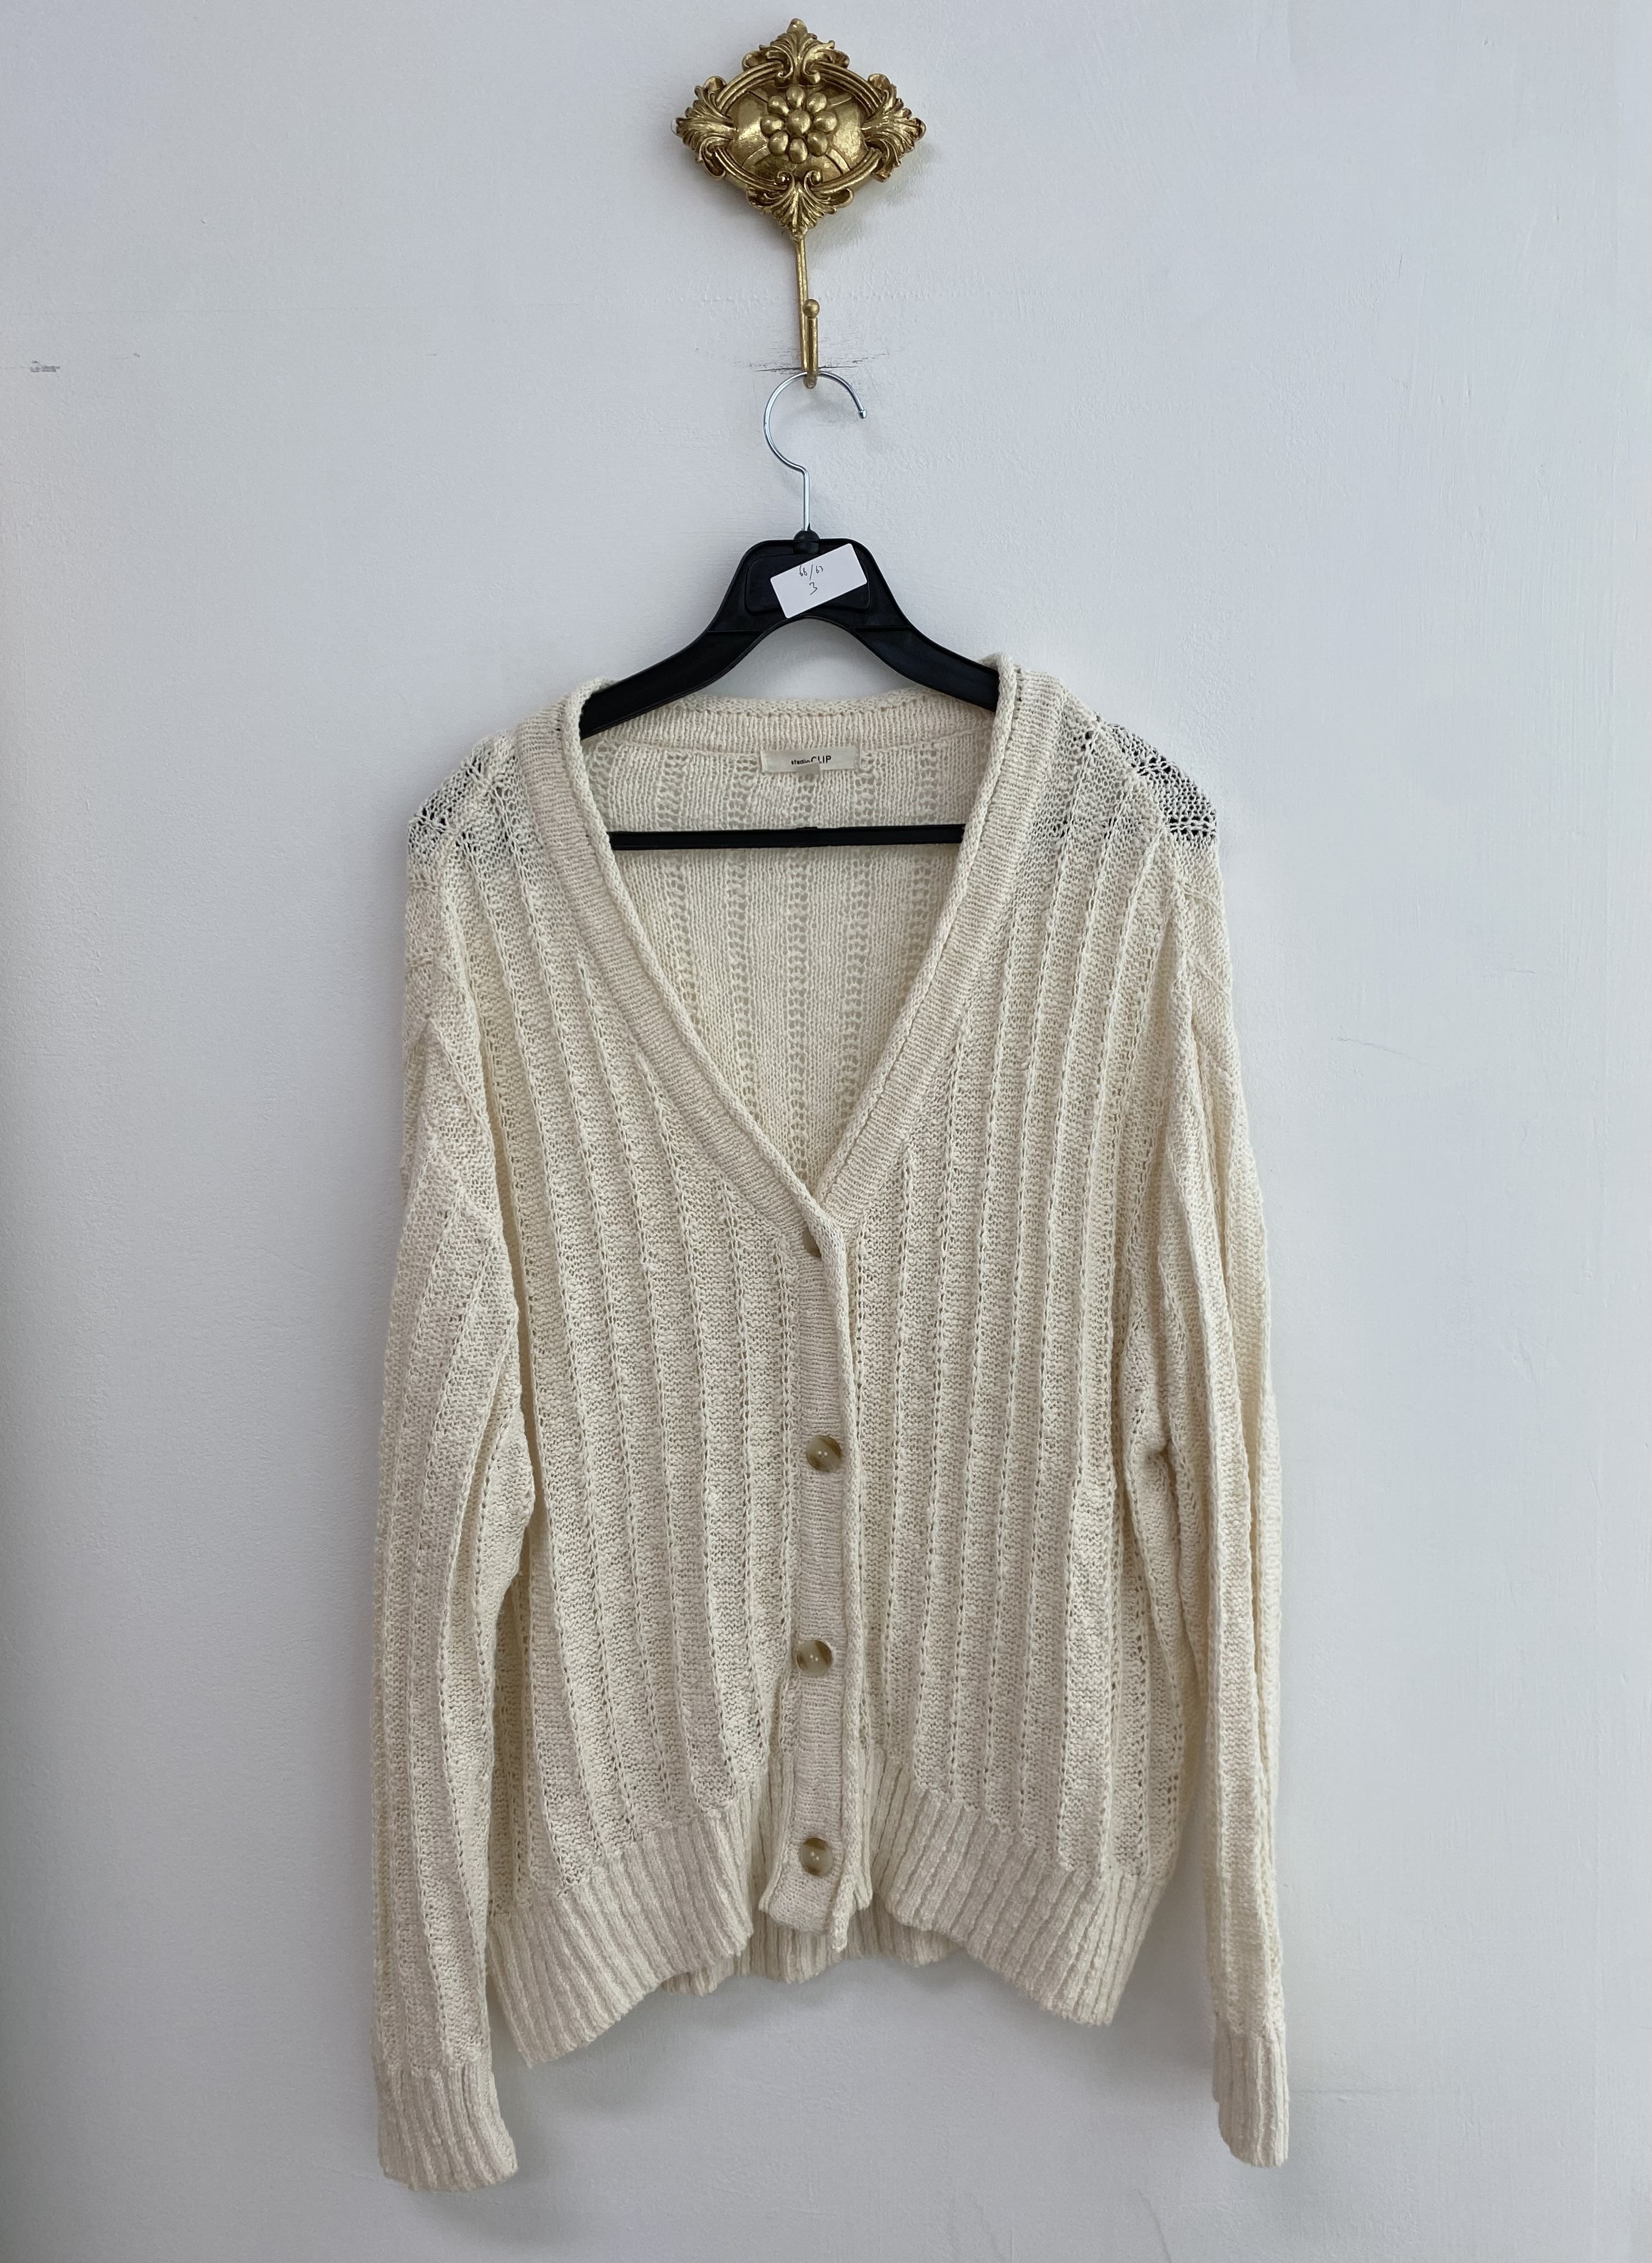 Ivory net button knit cardigan